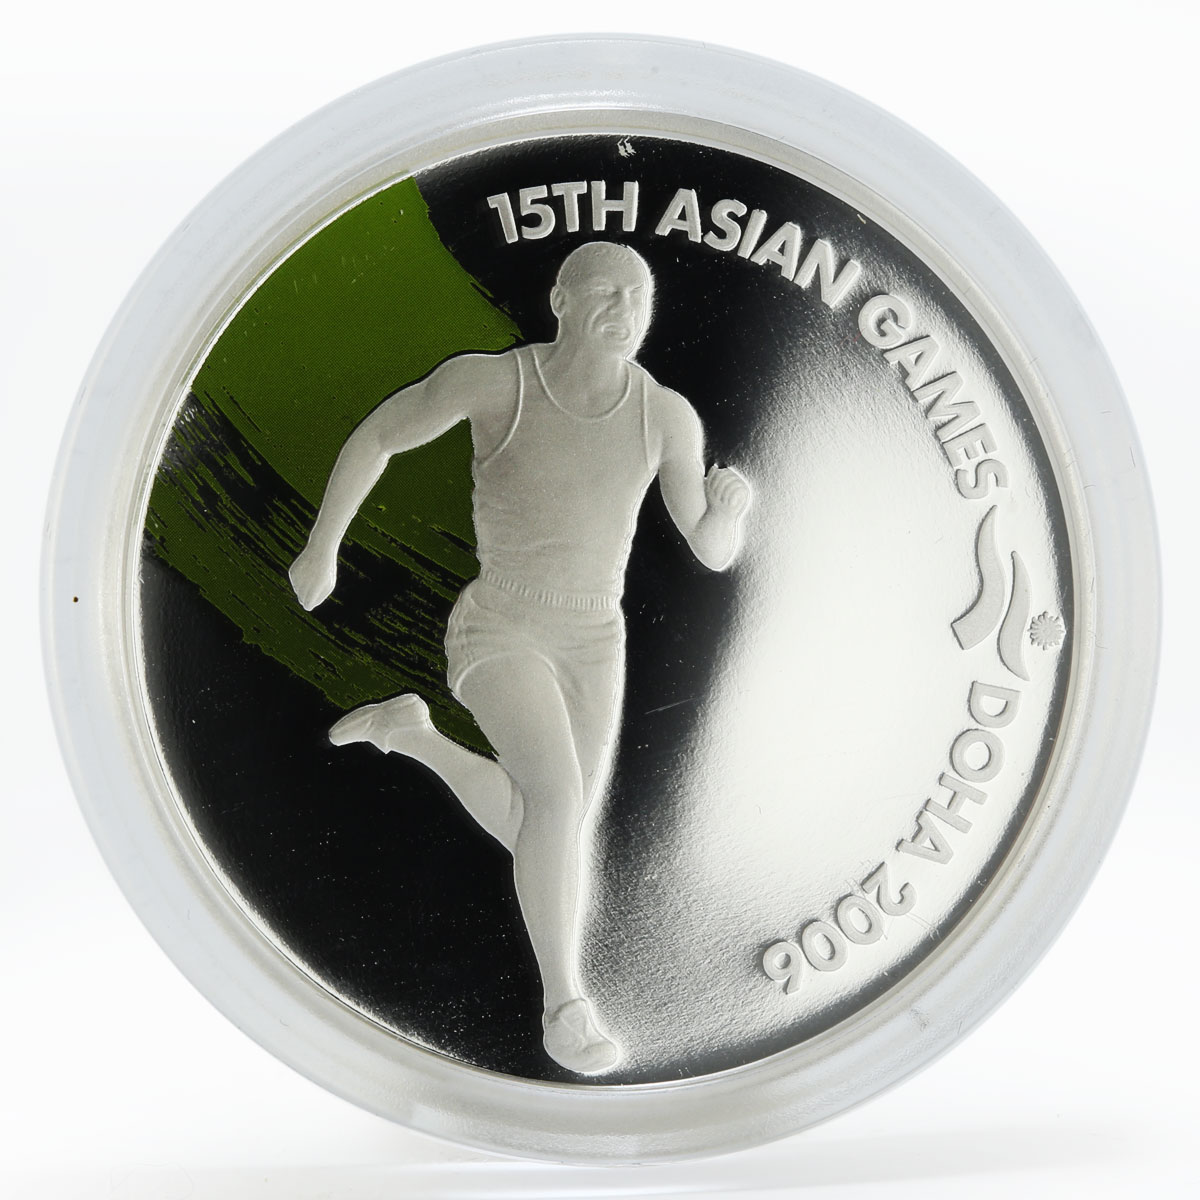 Qatar 10 riyals Asian Games Athletics proof silver coin 2006